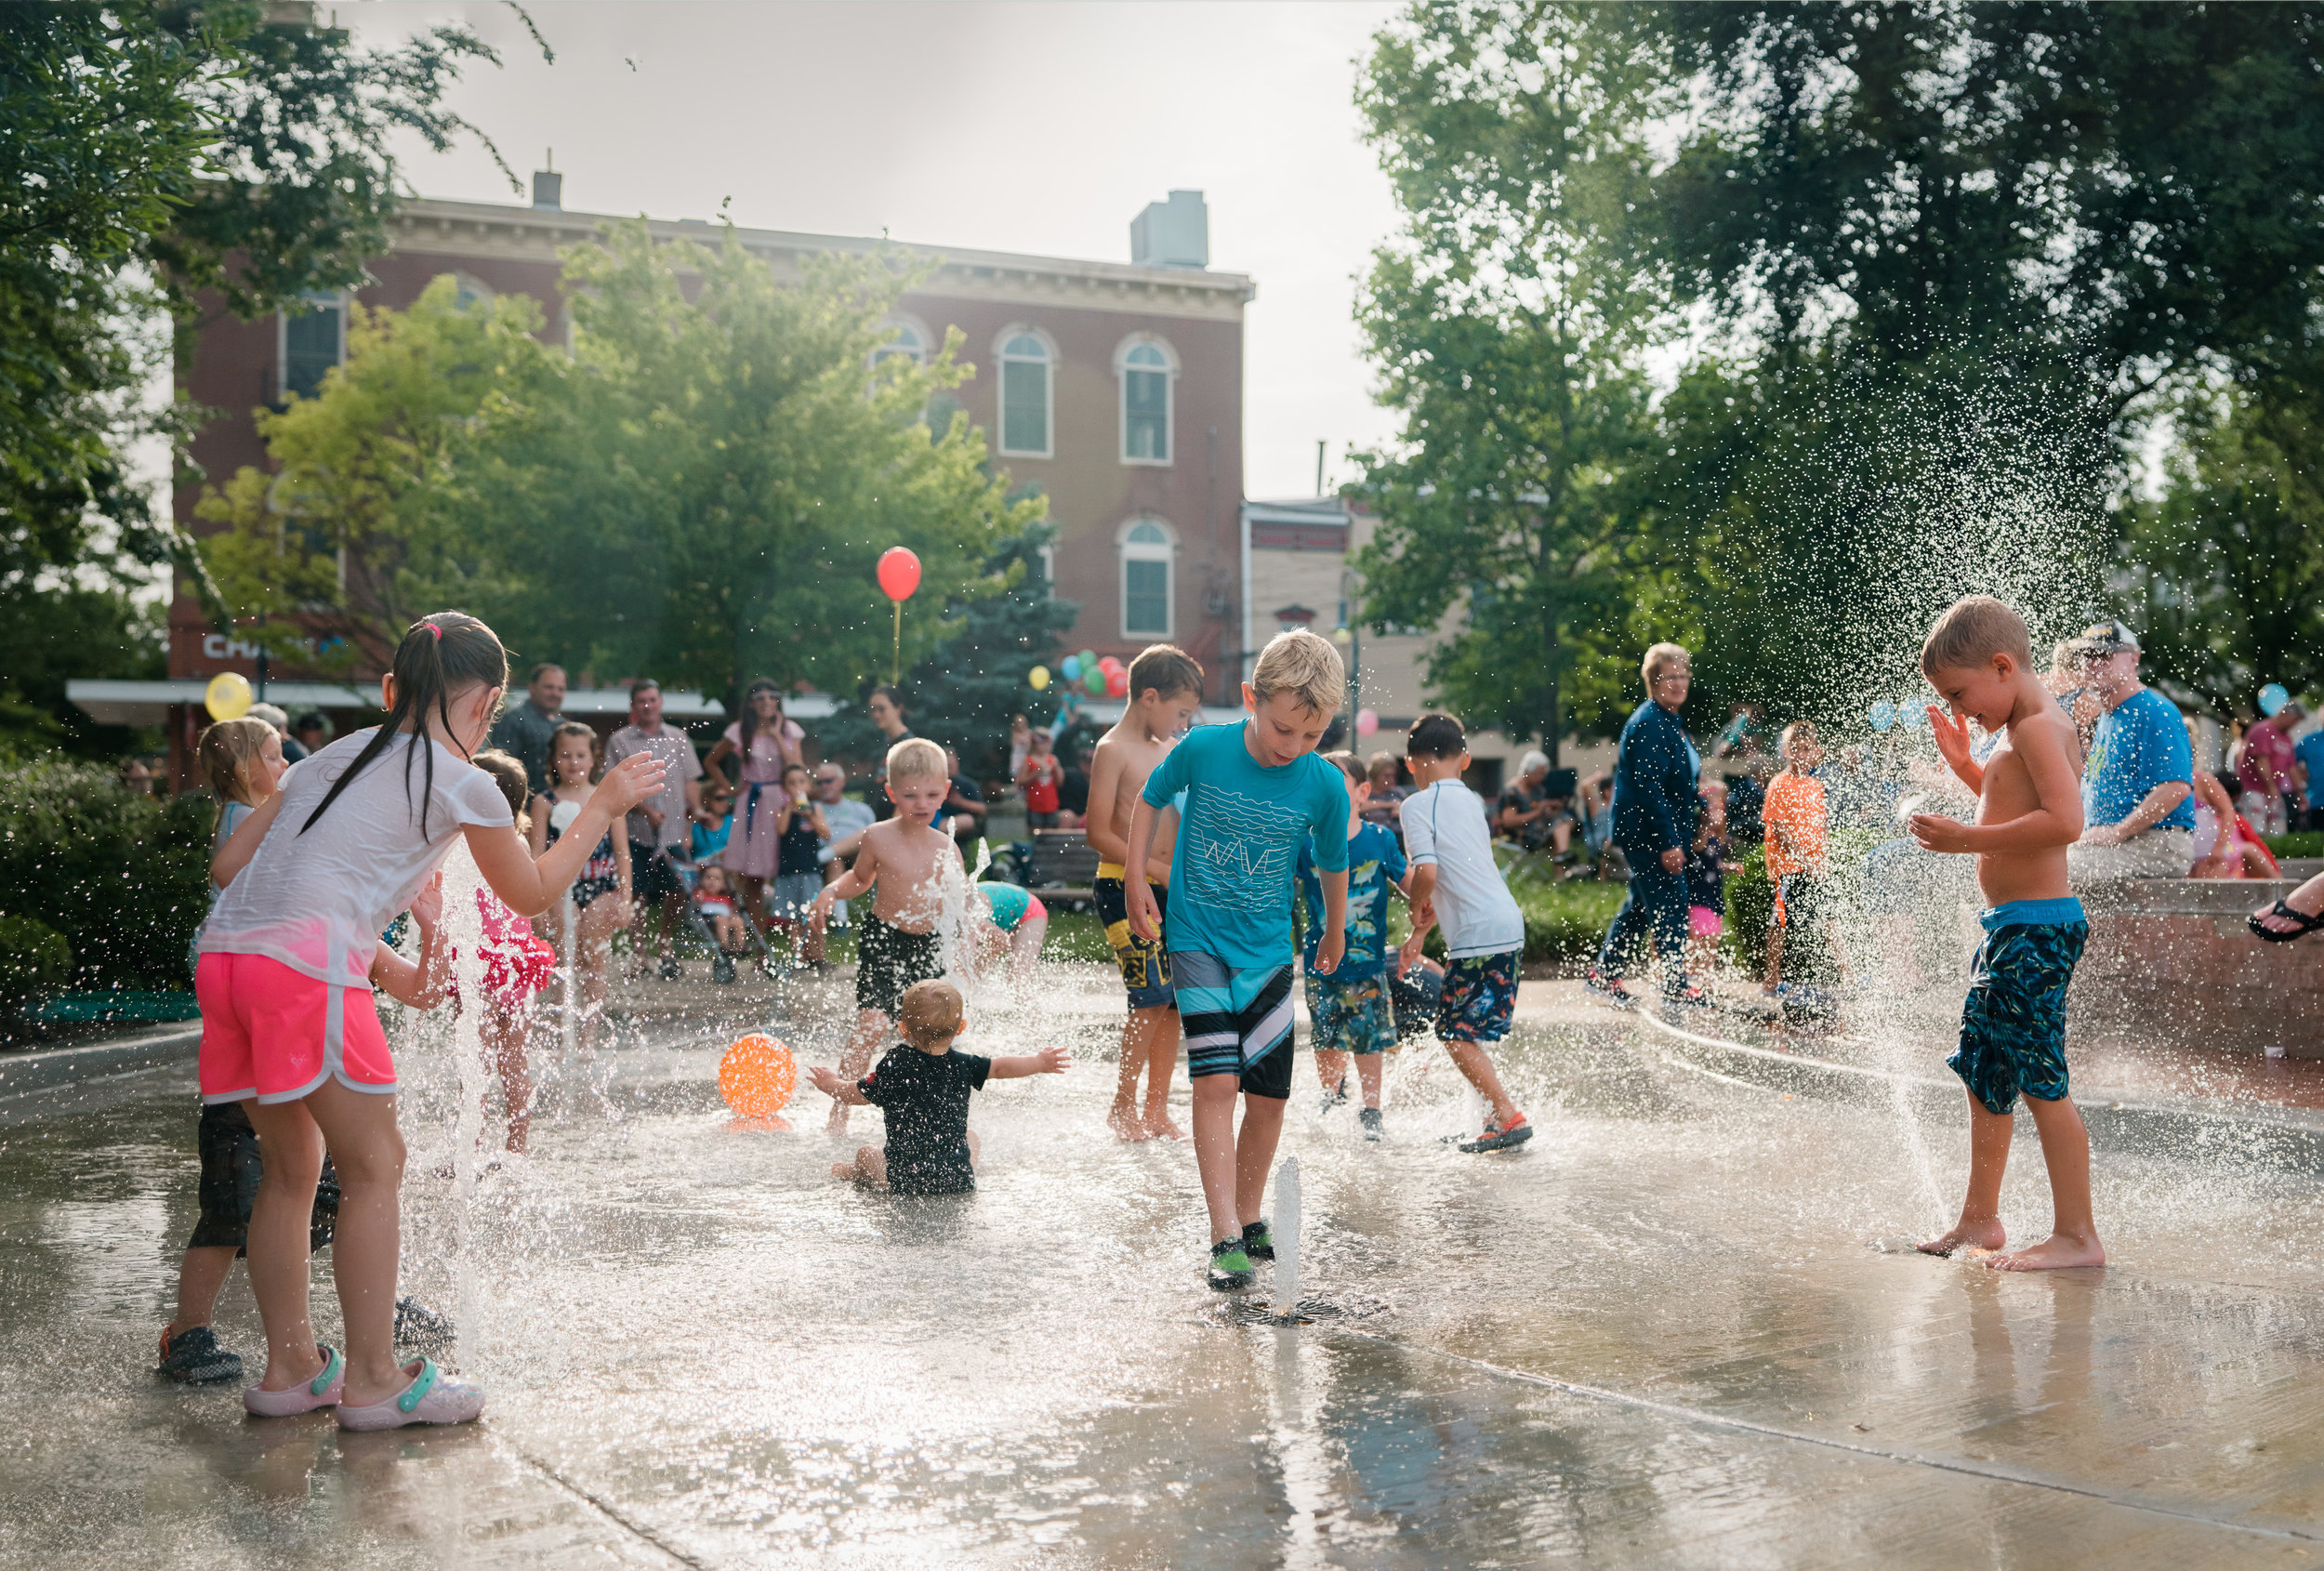 Kids playing in Fountain - photo by Ron Hautau.jpg